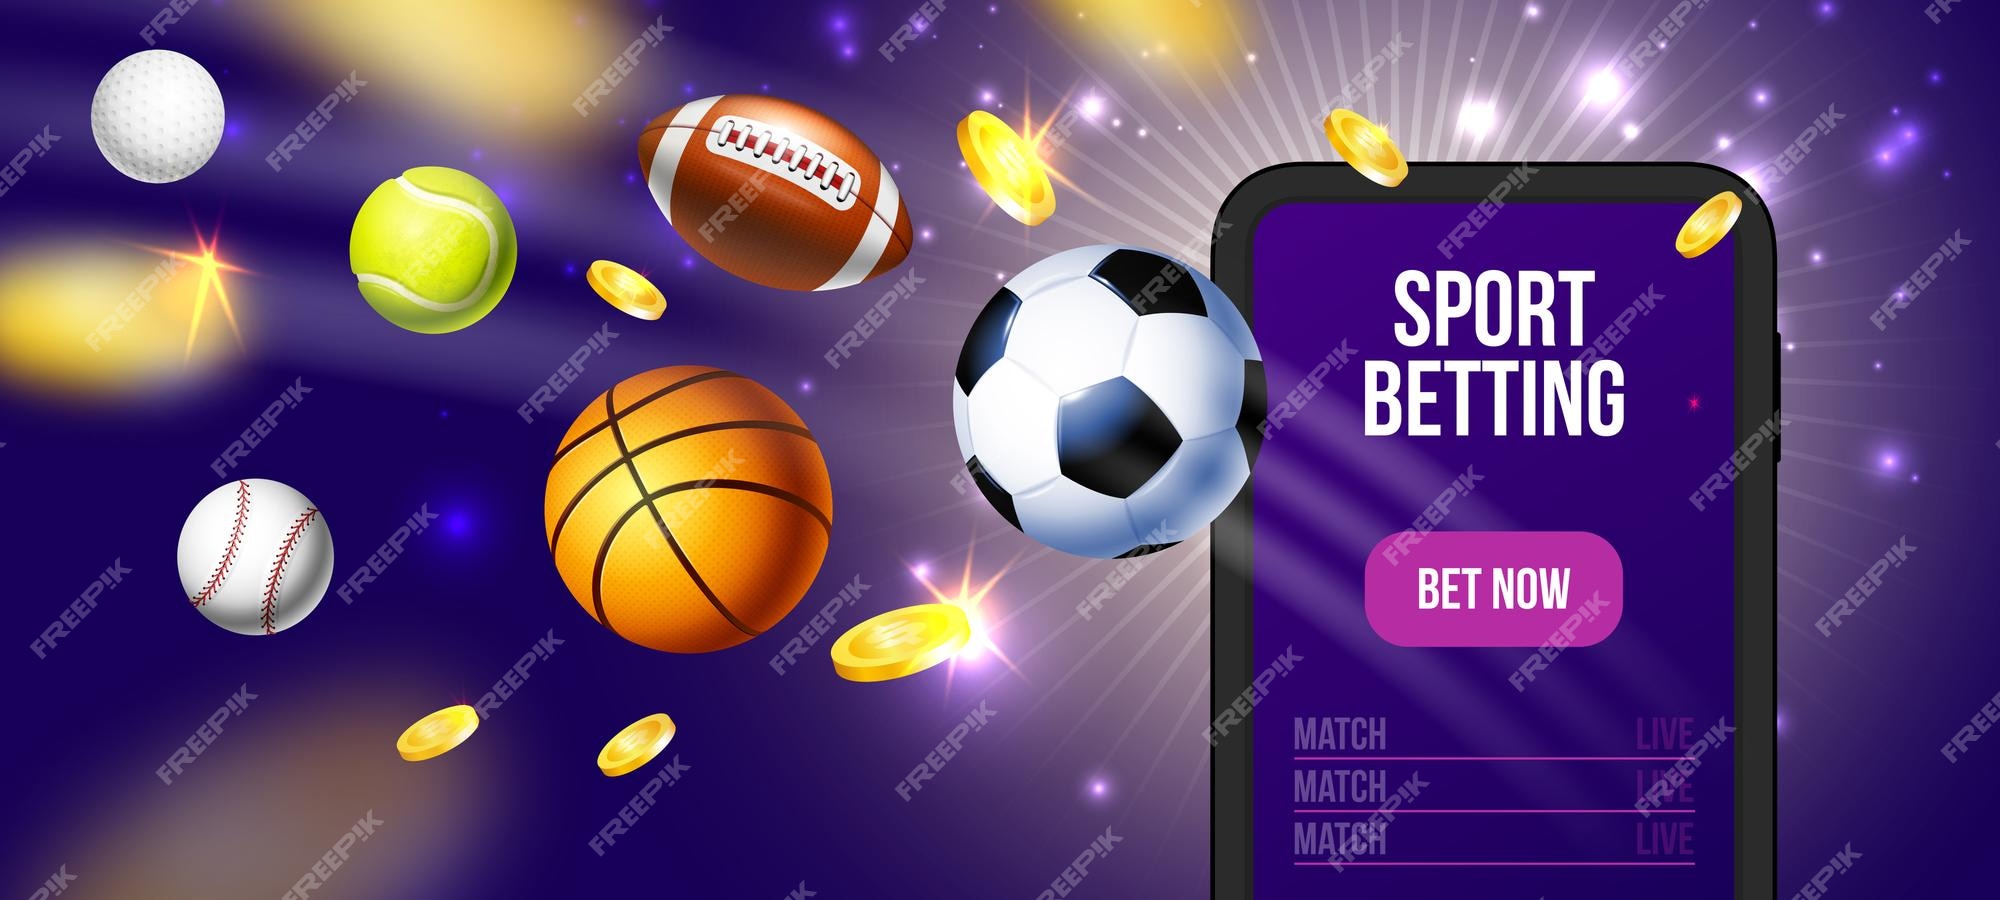 realistic-sports-betting-poster-sport-betting-headline-smartphone-screen-bet-now-button-vector-illustration_1284-77971.jpg